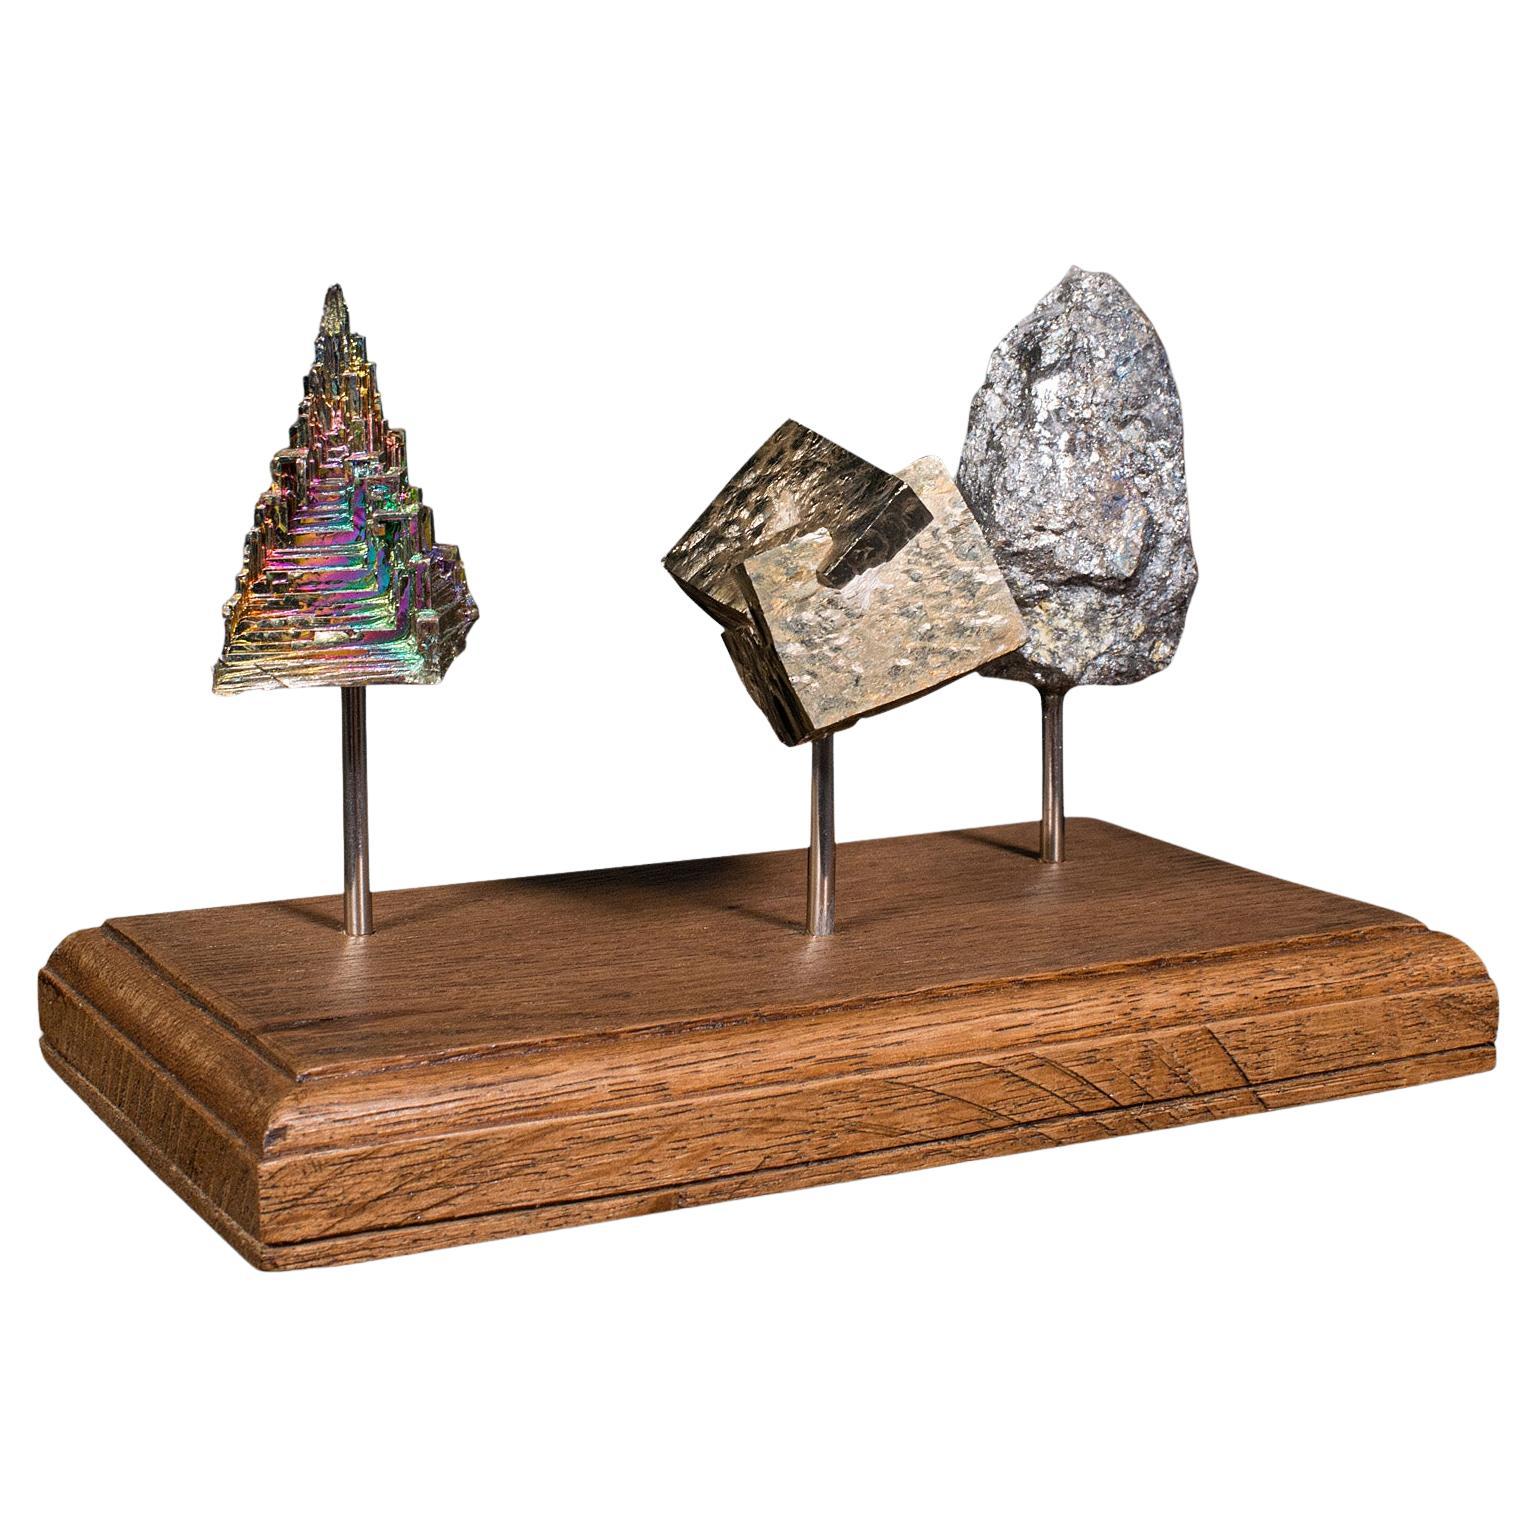 Set of Vintage Rare Earth Metals, Continental, Decorative Display, Oak Plinth